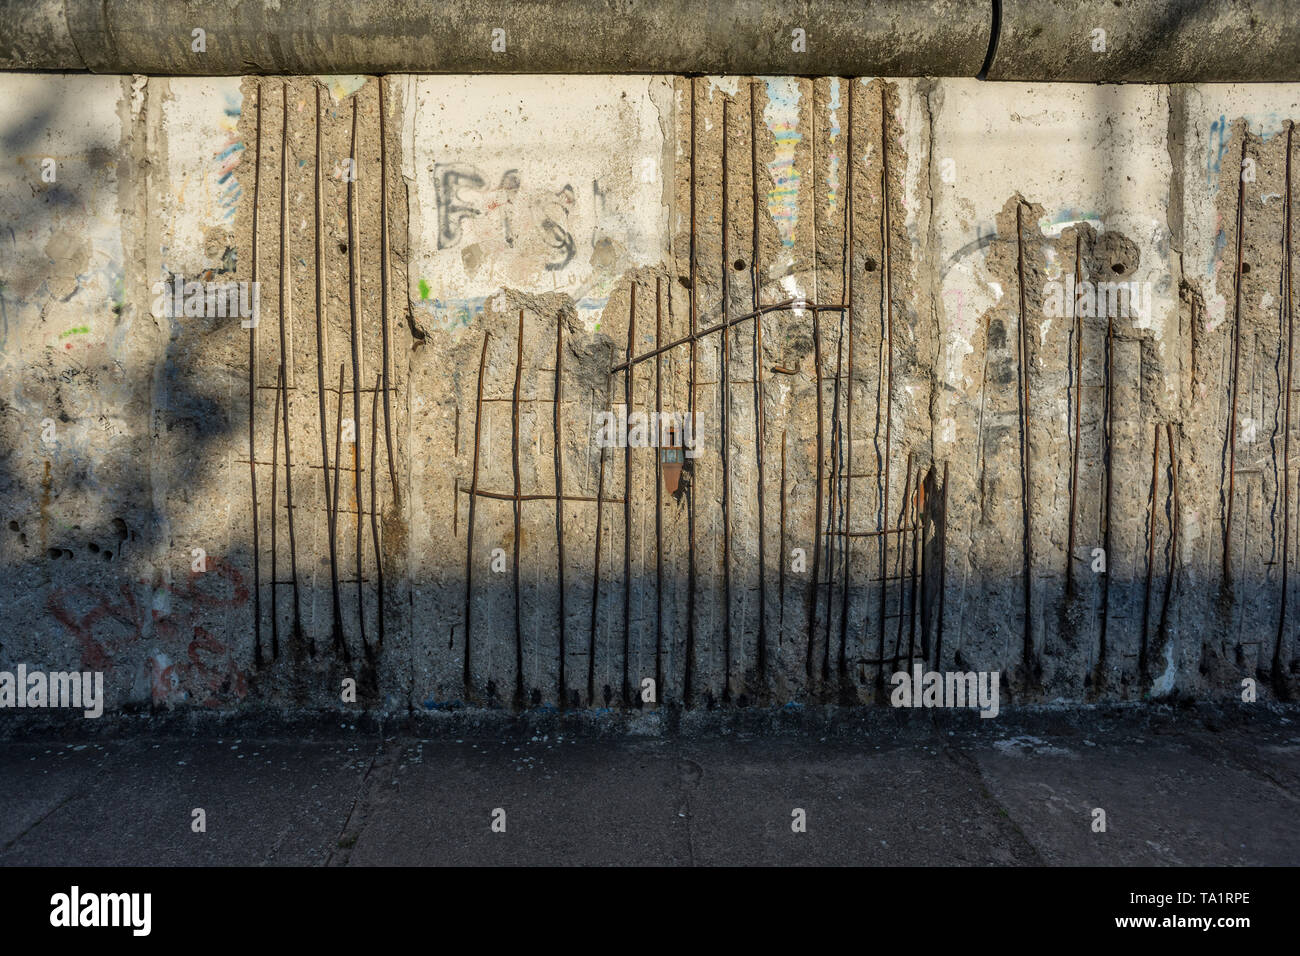 The Berlin Wall Memorial in Berlin, Germany 2019. Stock Photo